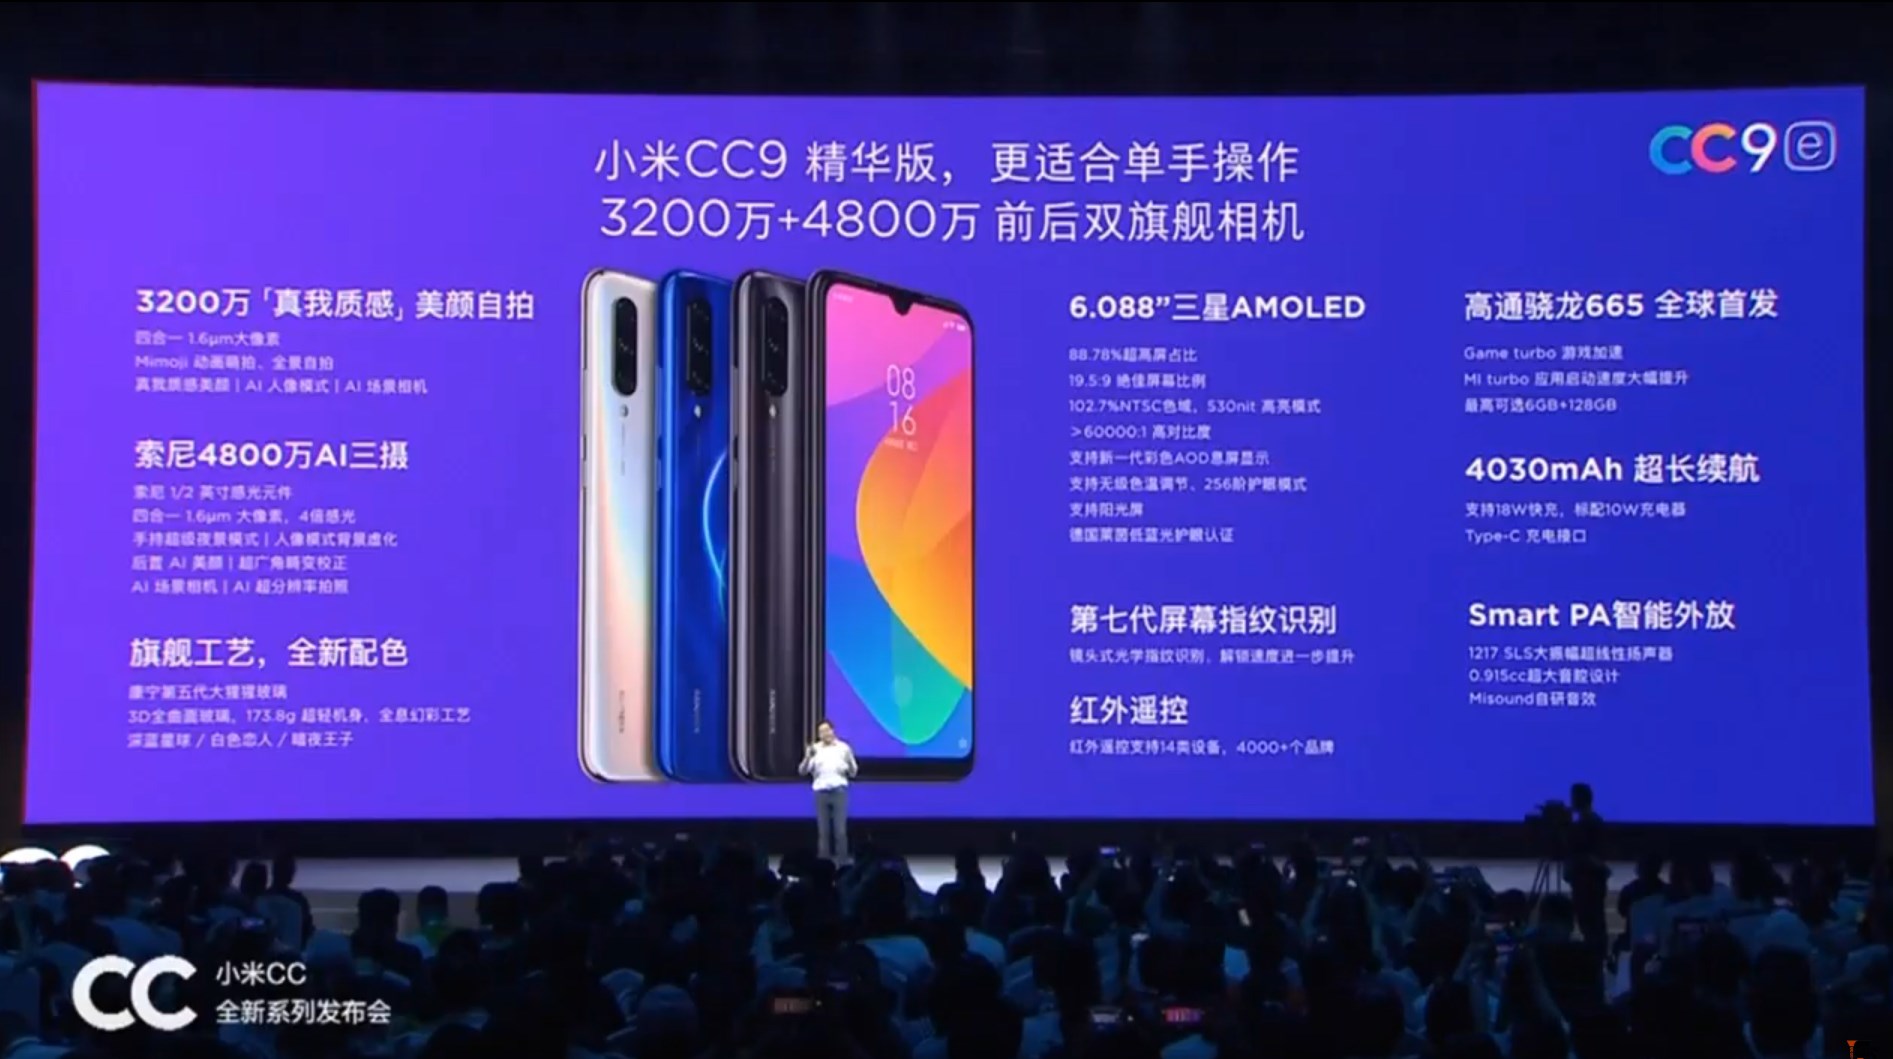 Xiaomi CC9 a